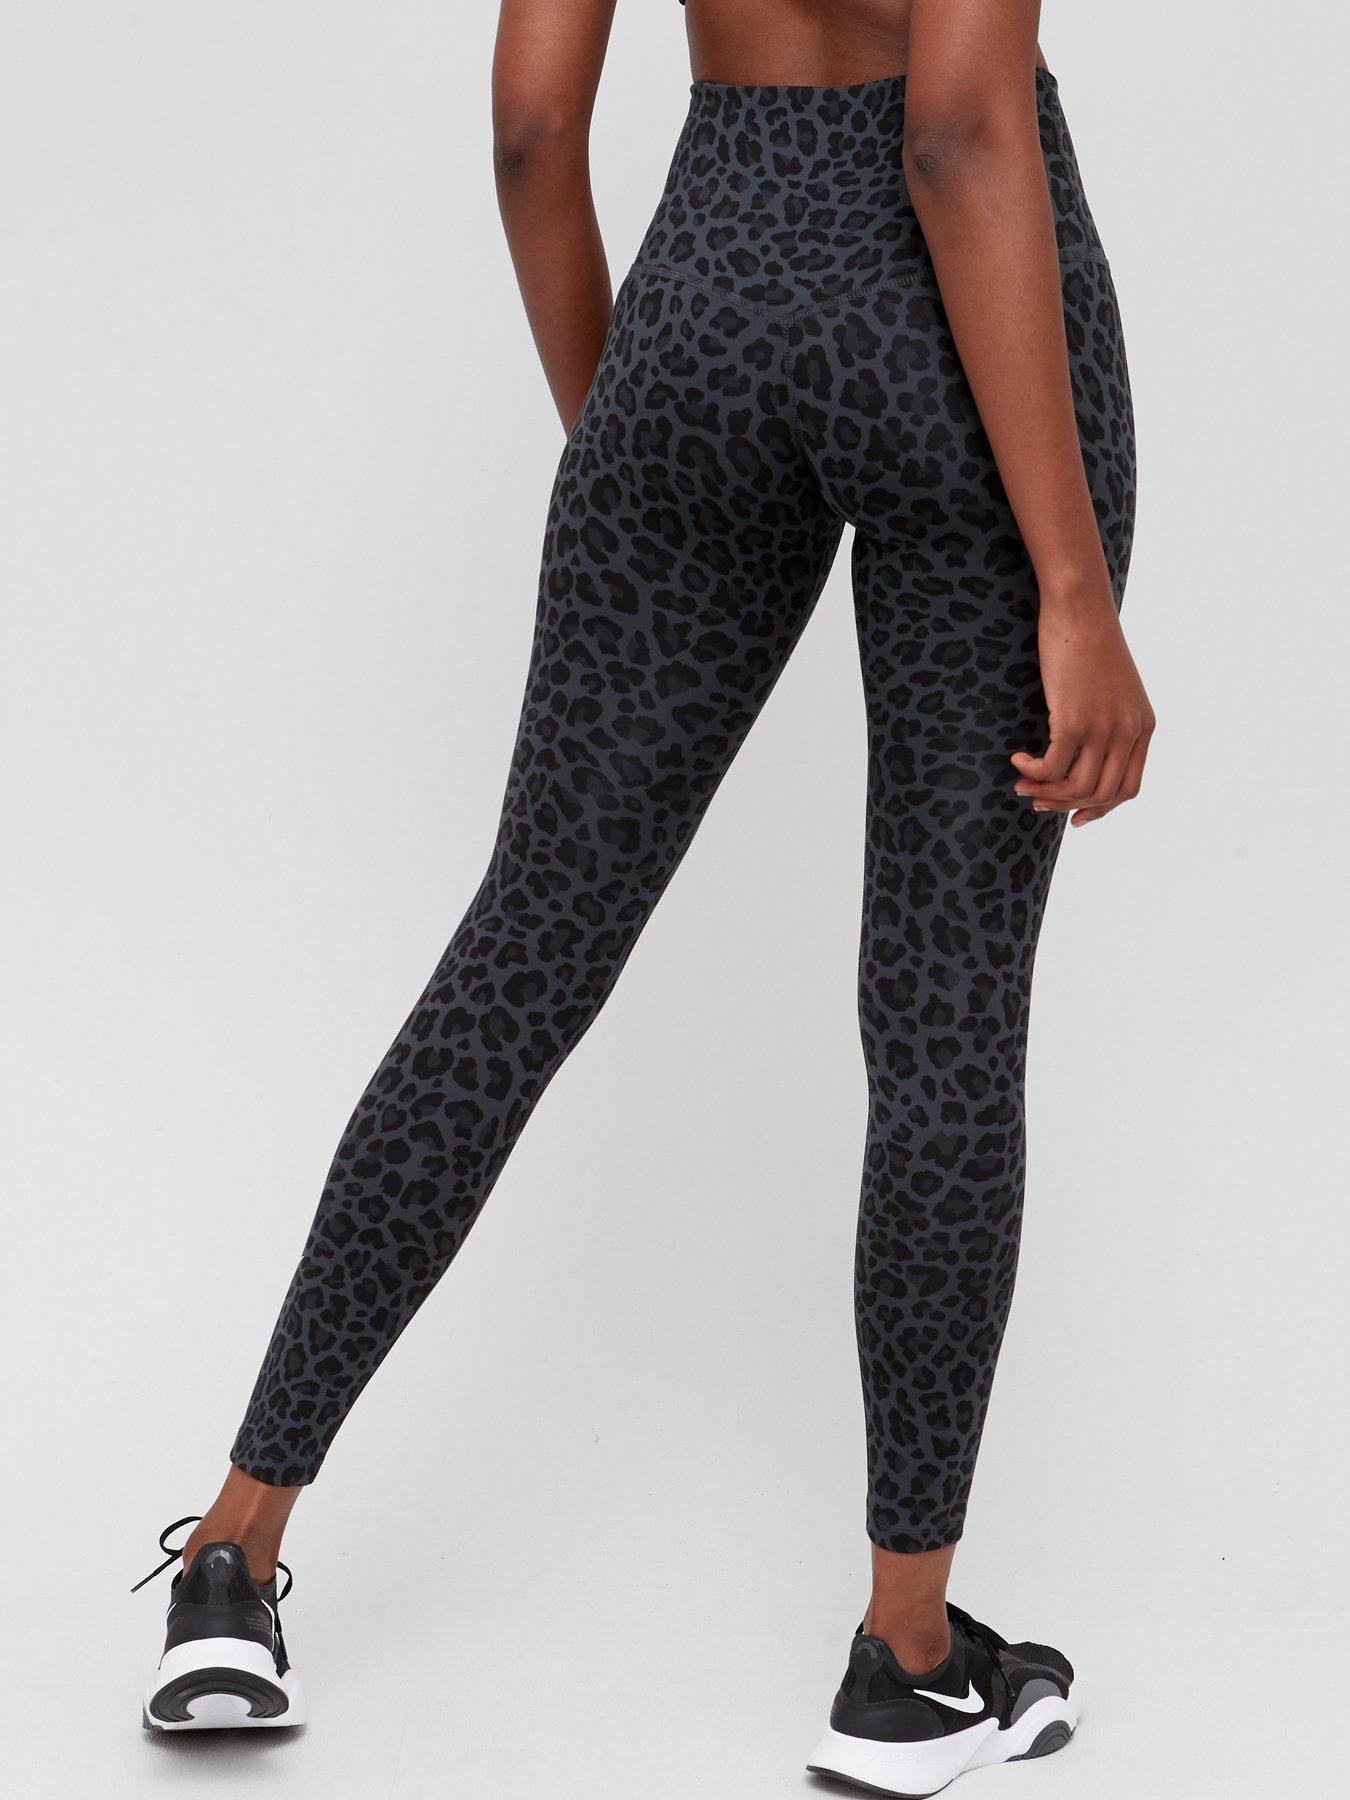 Nike Training One Dri-FIT high rise leopard print leggings in black